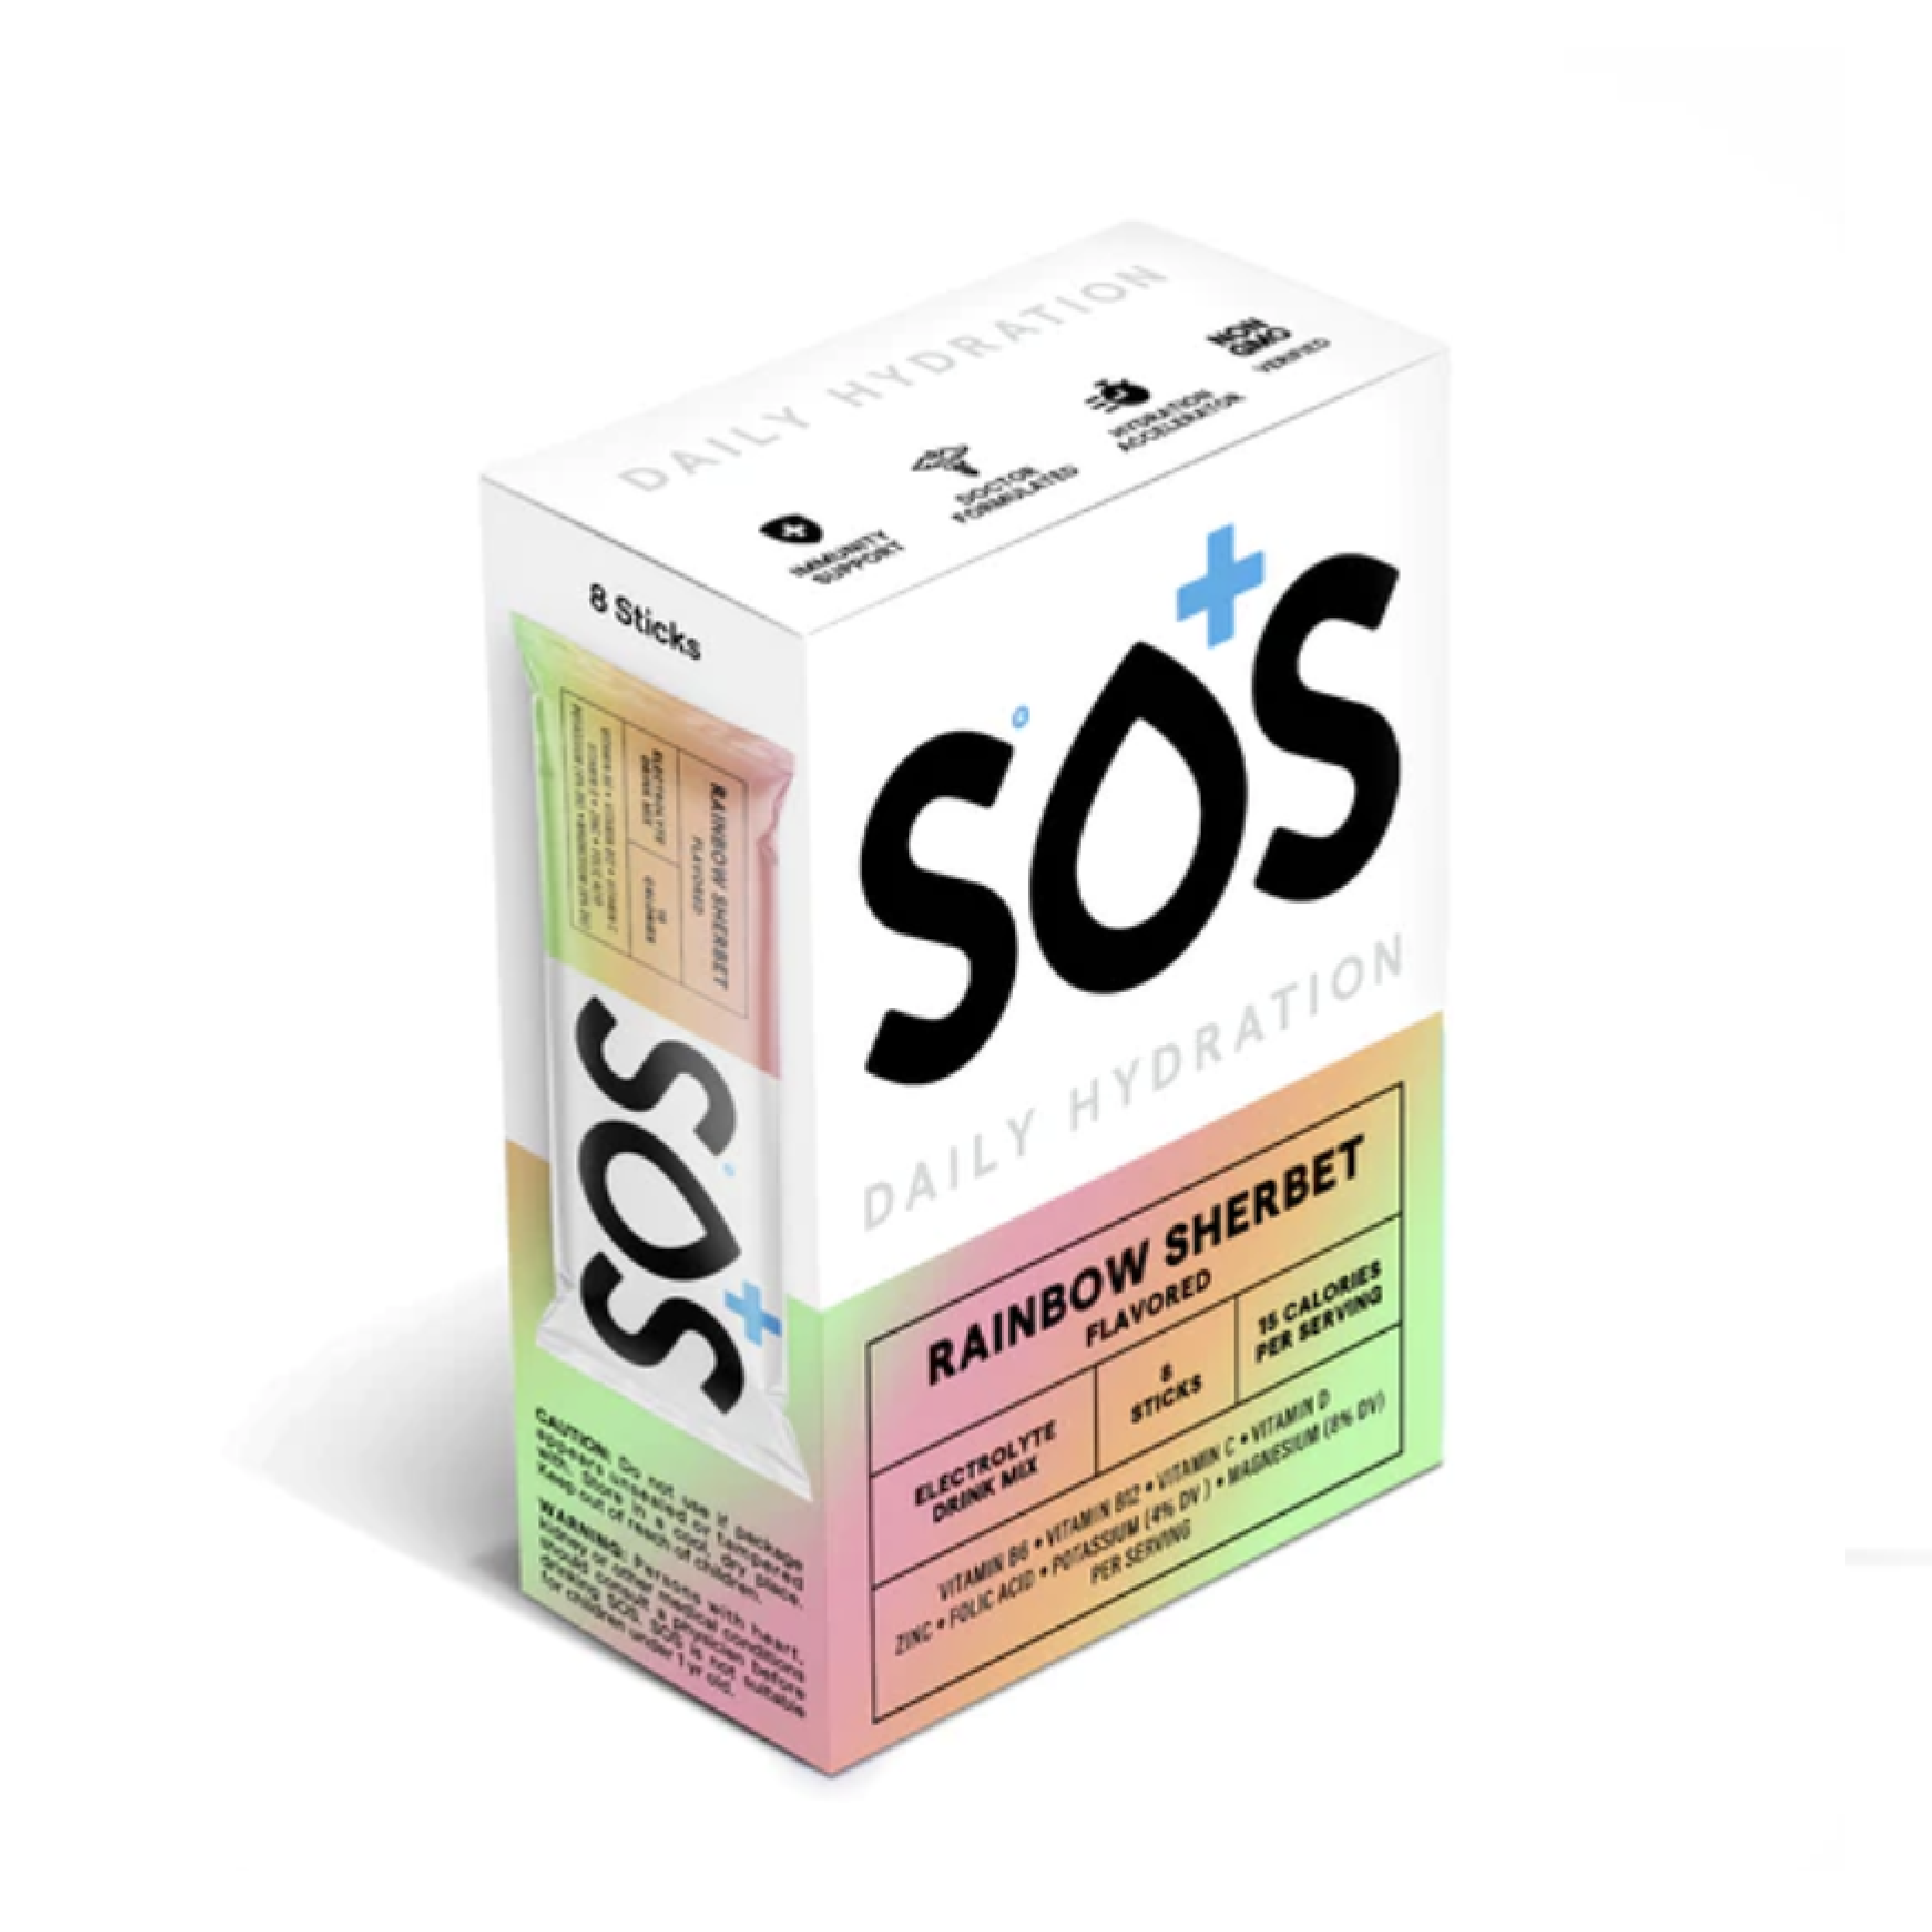 Rendering of SOS Daily Hydration Rainbow Sherbet Box